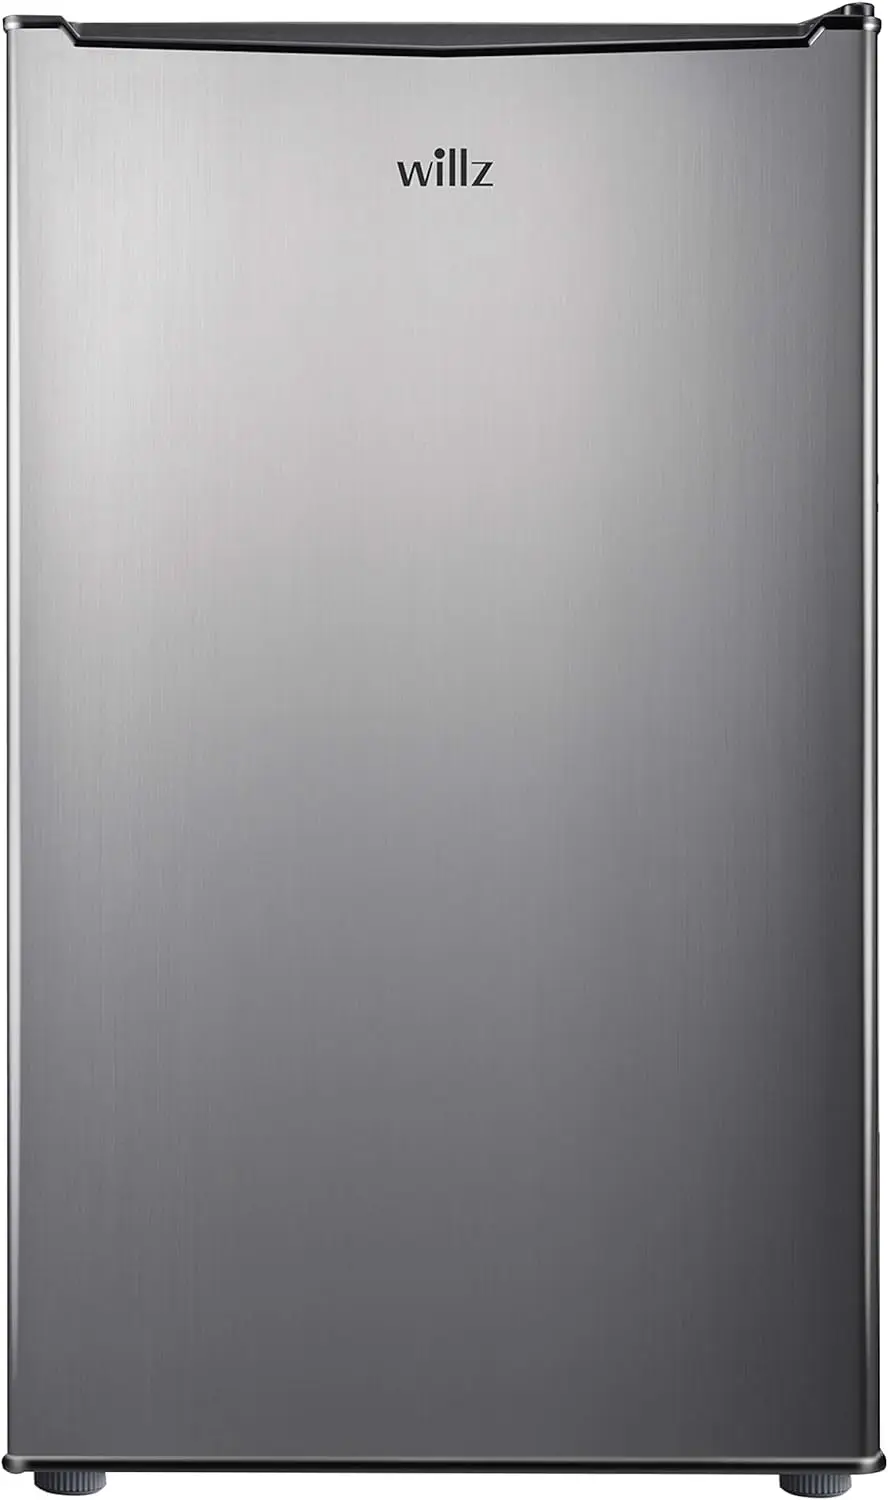 

Compact Refrigerator, Single Door Fridge, Adjustable Mechanical Thermostat with Chiller, Stainless Steel Look, 3.3 Cu Ft Mini de